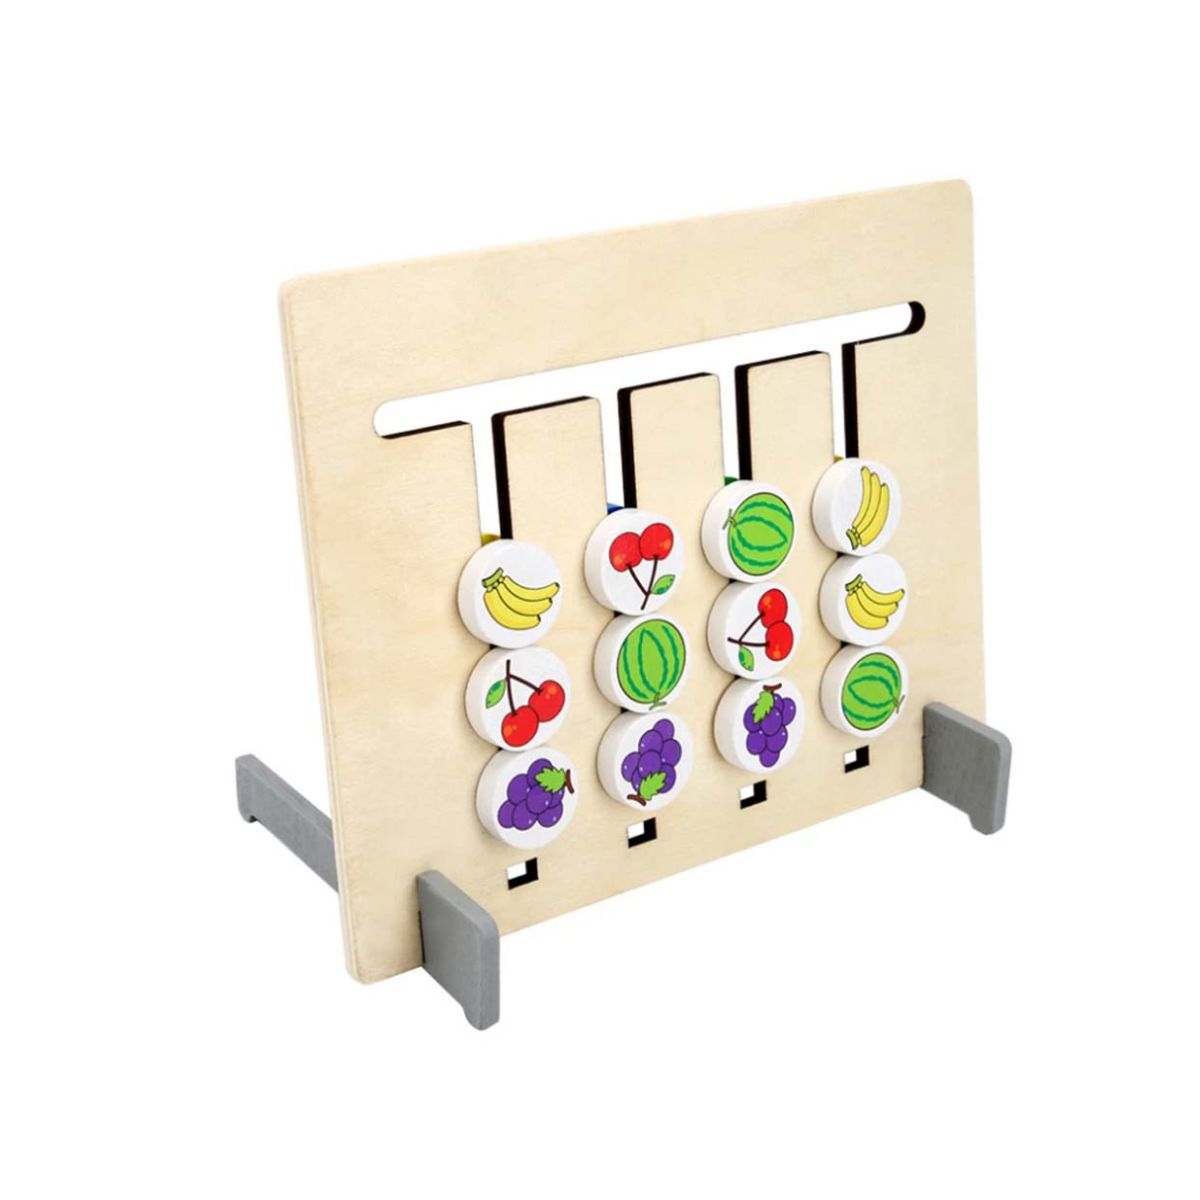 Jucarii interior - Joc Montessori – Labirint asociere culori si fructe 2 in 1, WD 9514, hectarul.ro